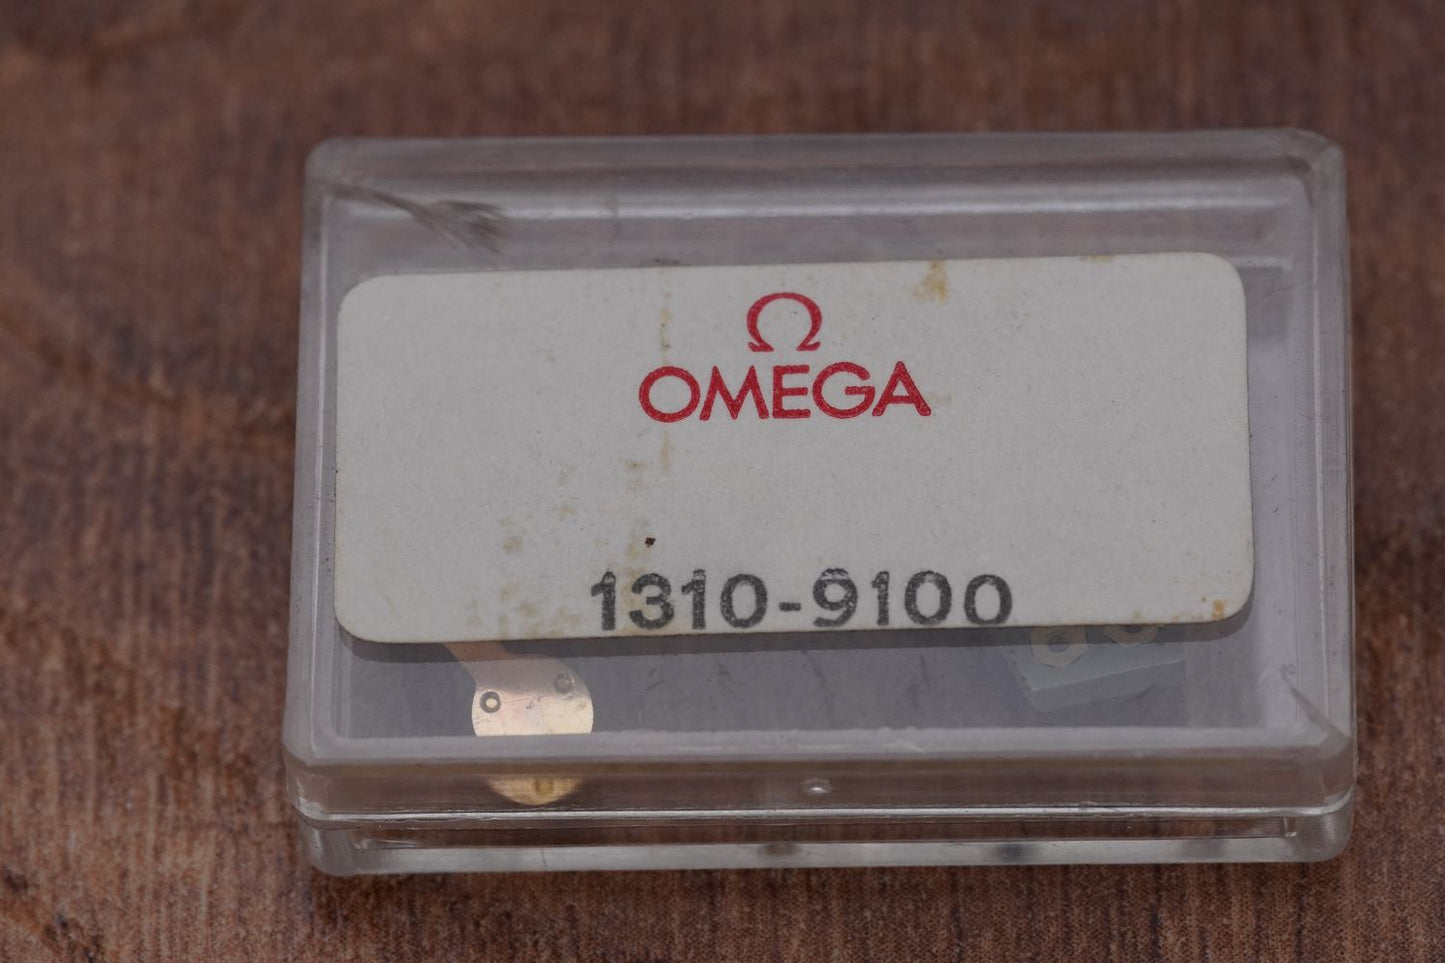 Omega cal 1310 part 9100 electronic module